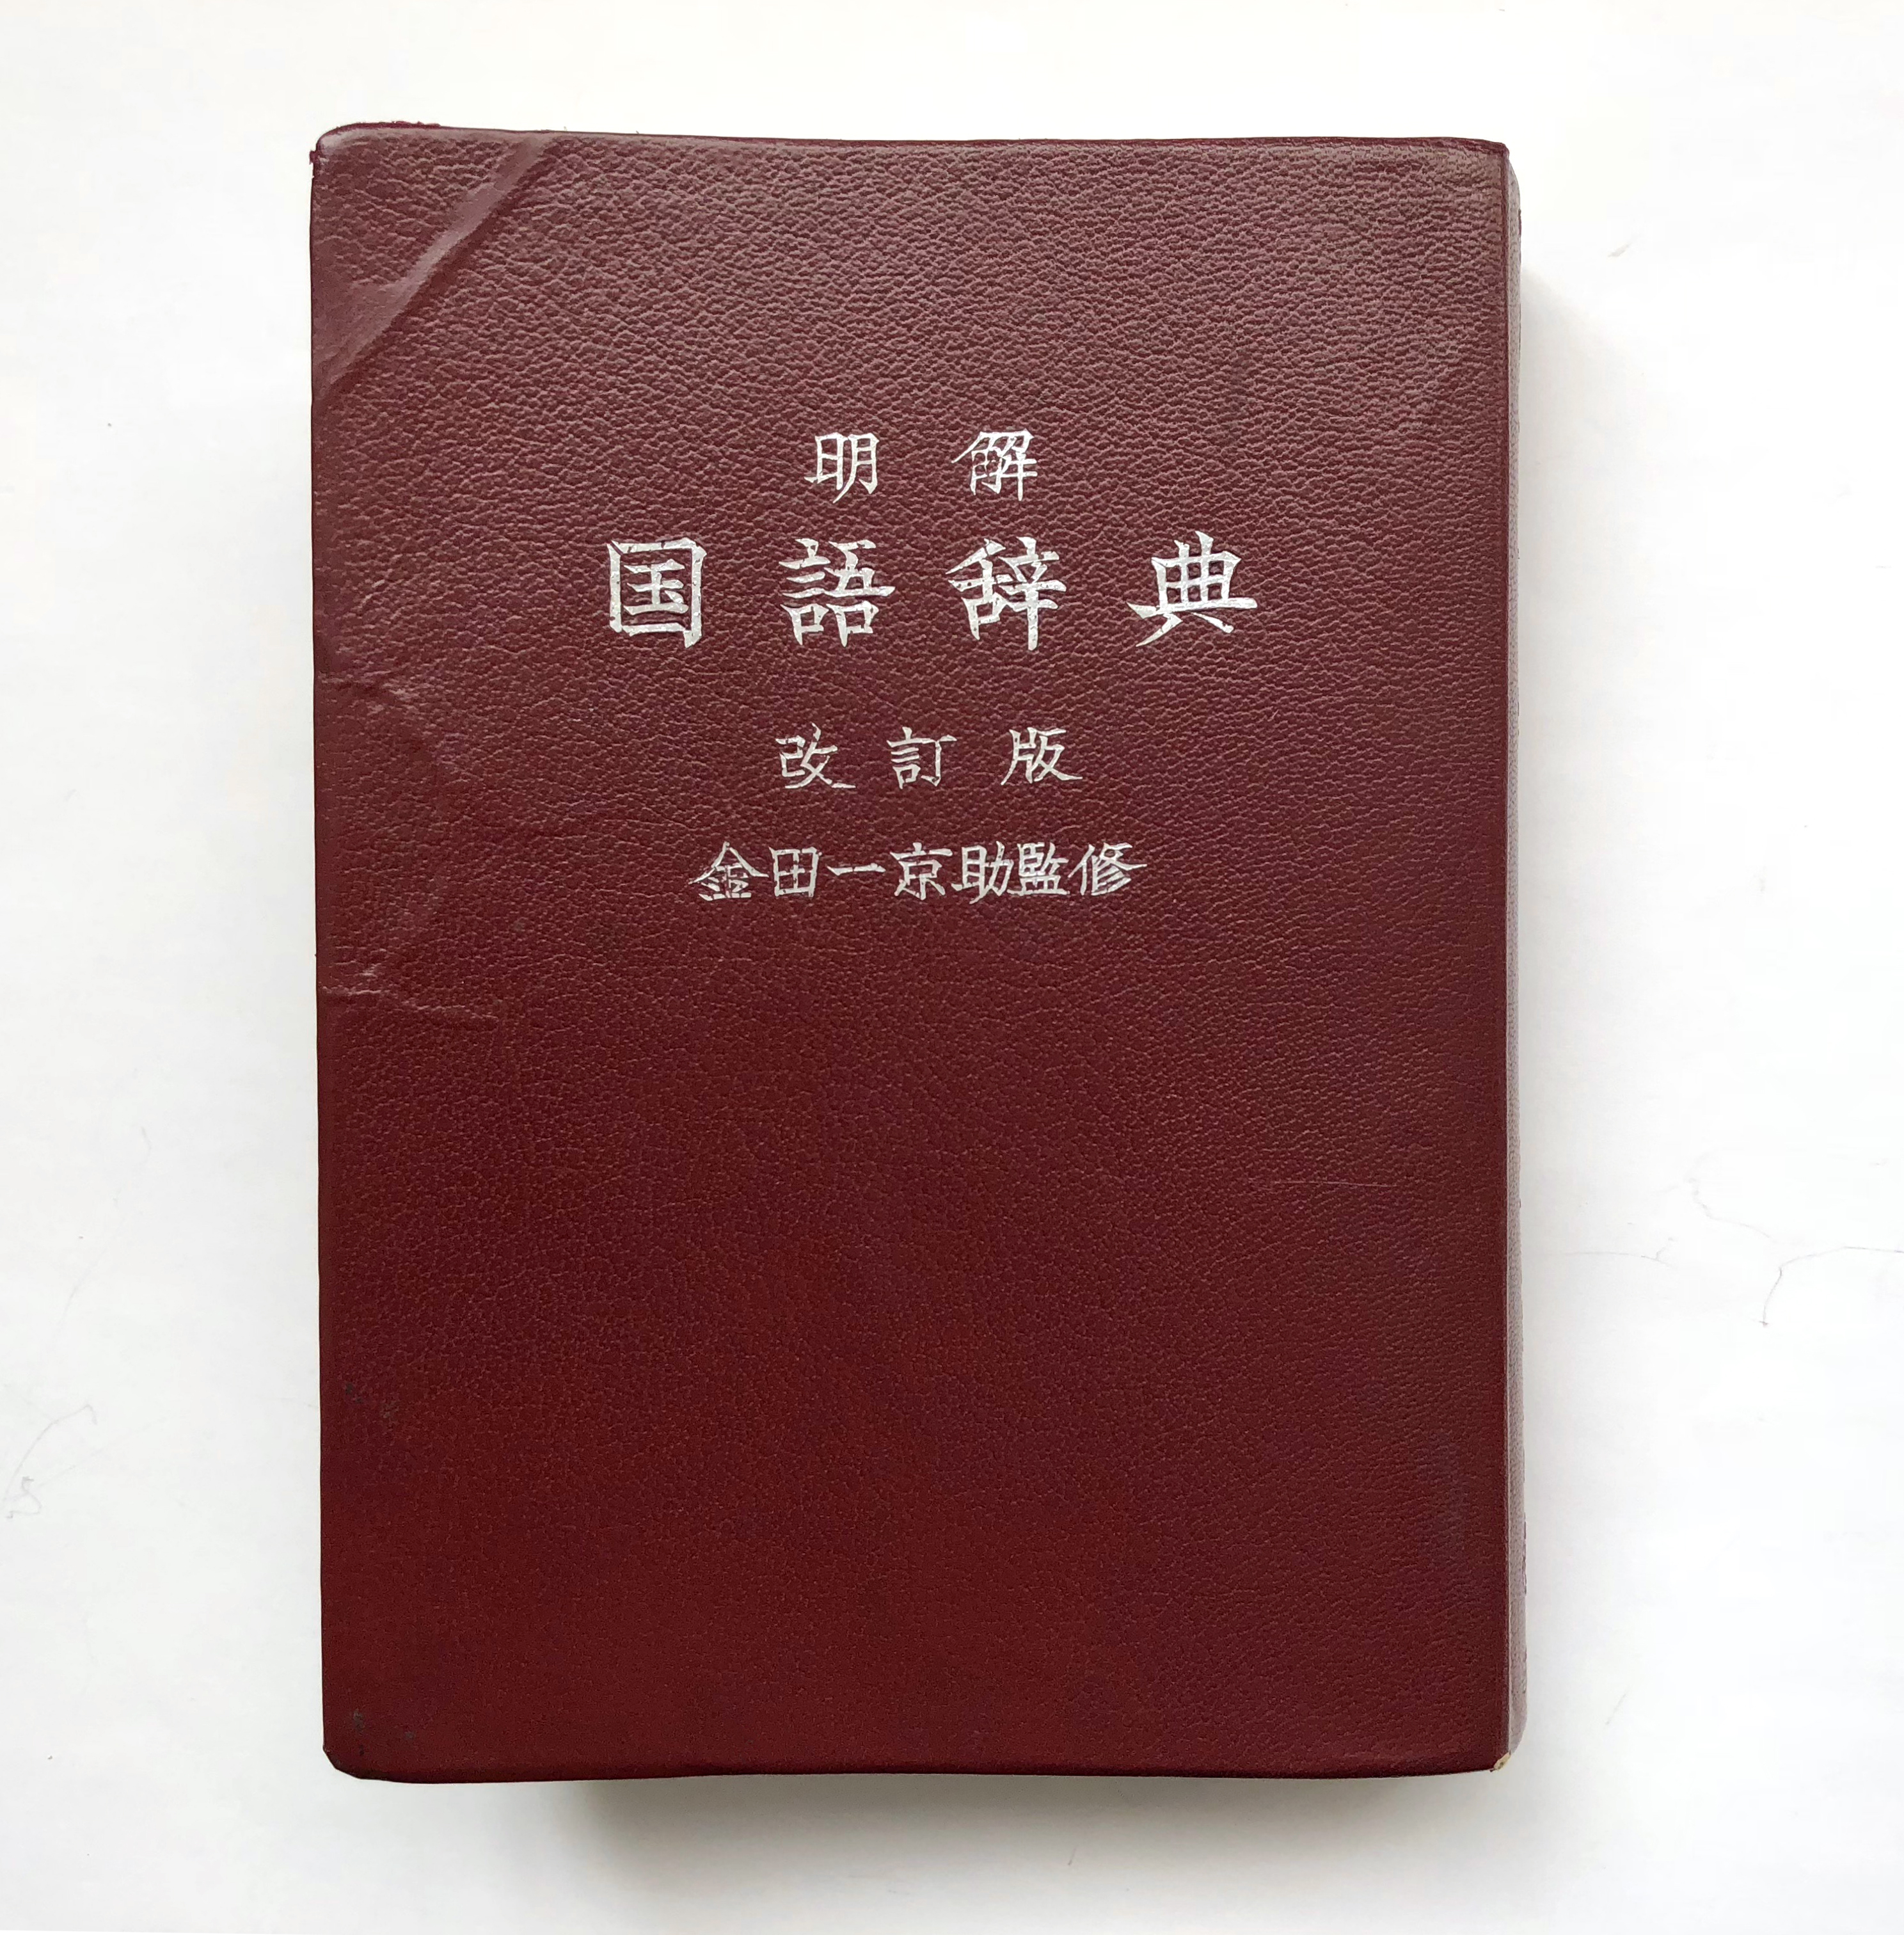 File:明解国語辞典(改訂版)表紙.jpg - Wikimedia Commons